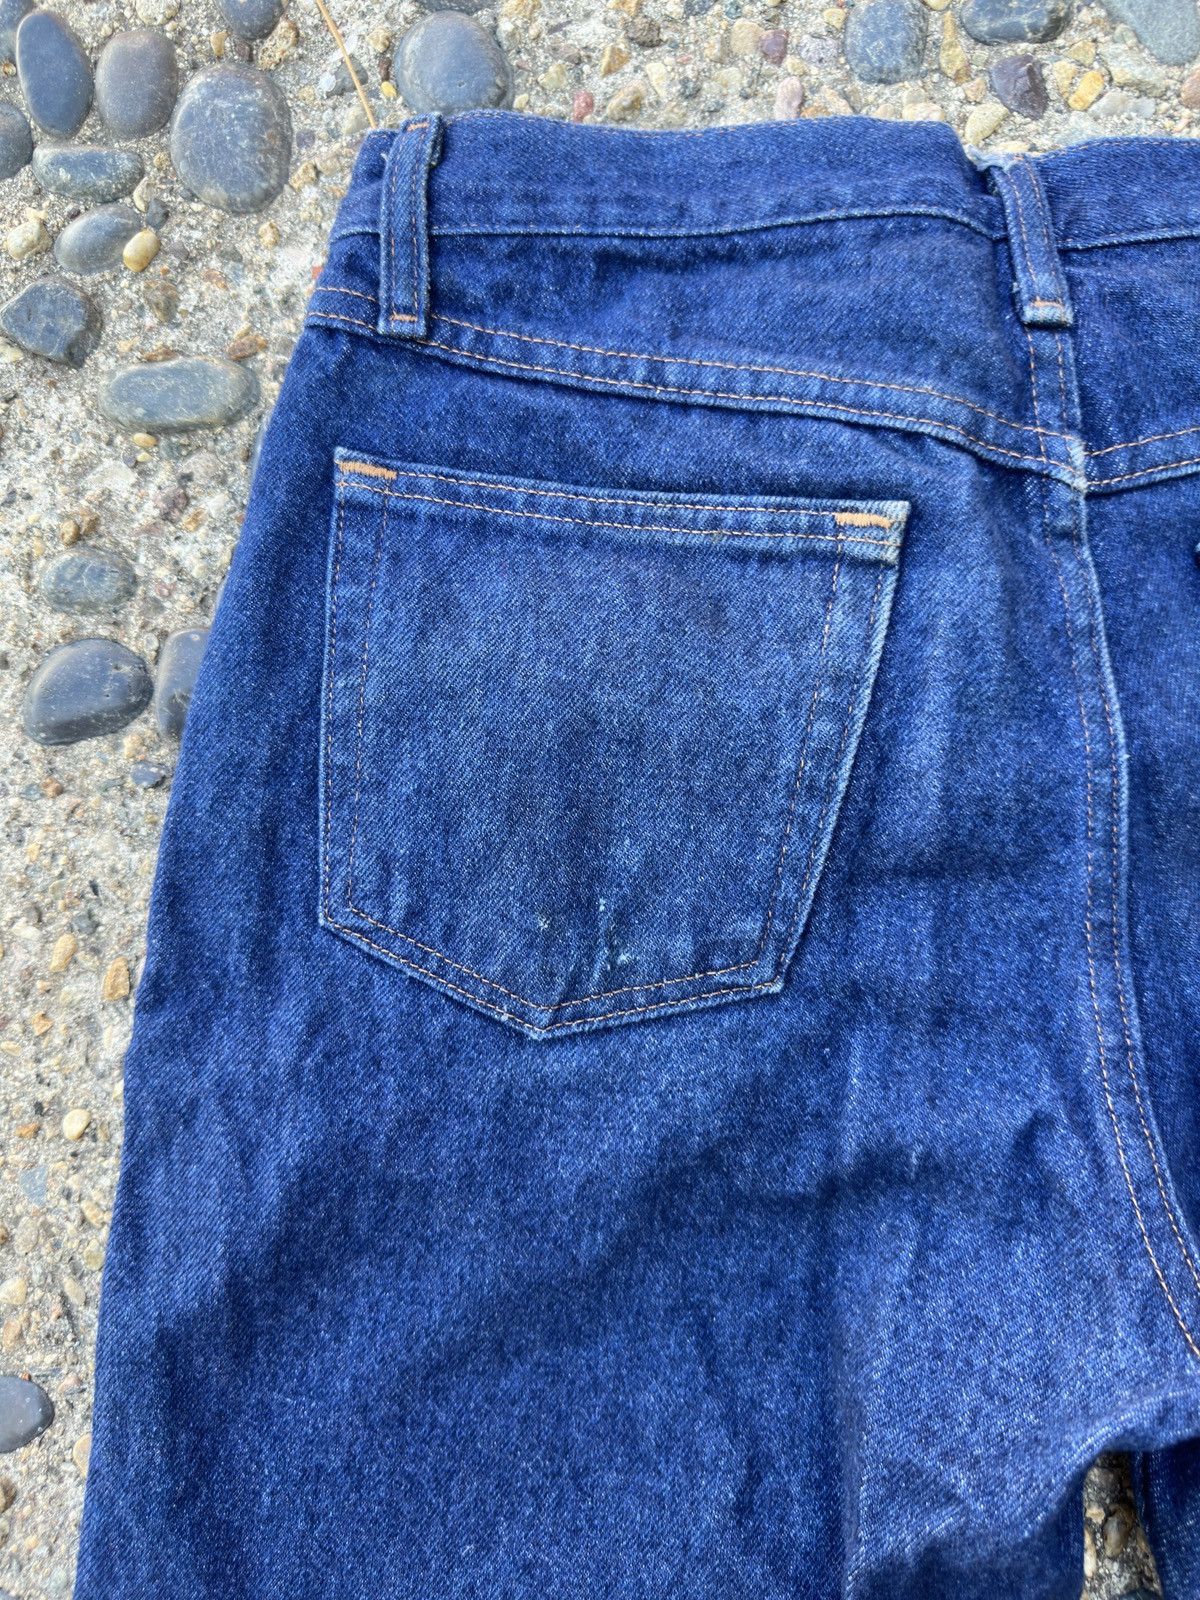 Vintage Vintage Rustler Jeans Size 31x30 Size US 30 / EU 46 - 10 Thumbnail